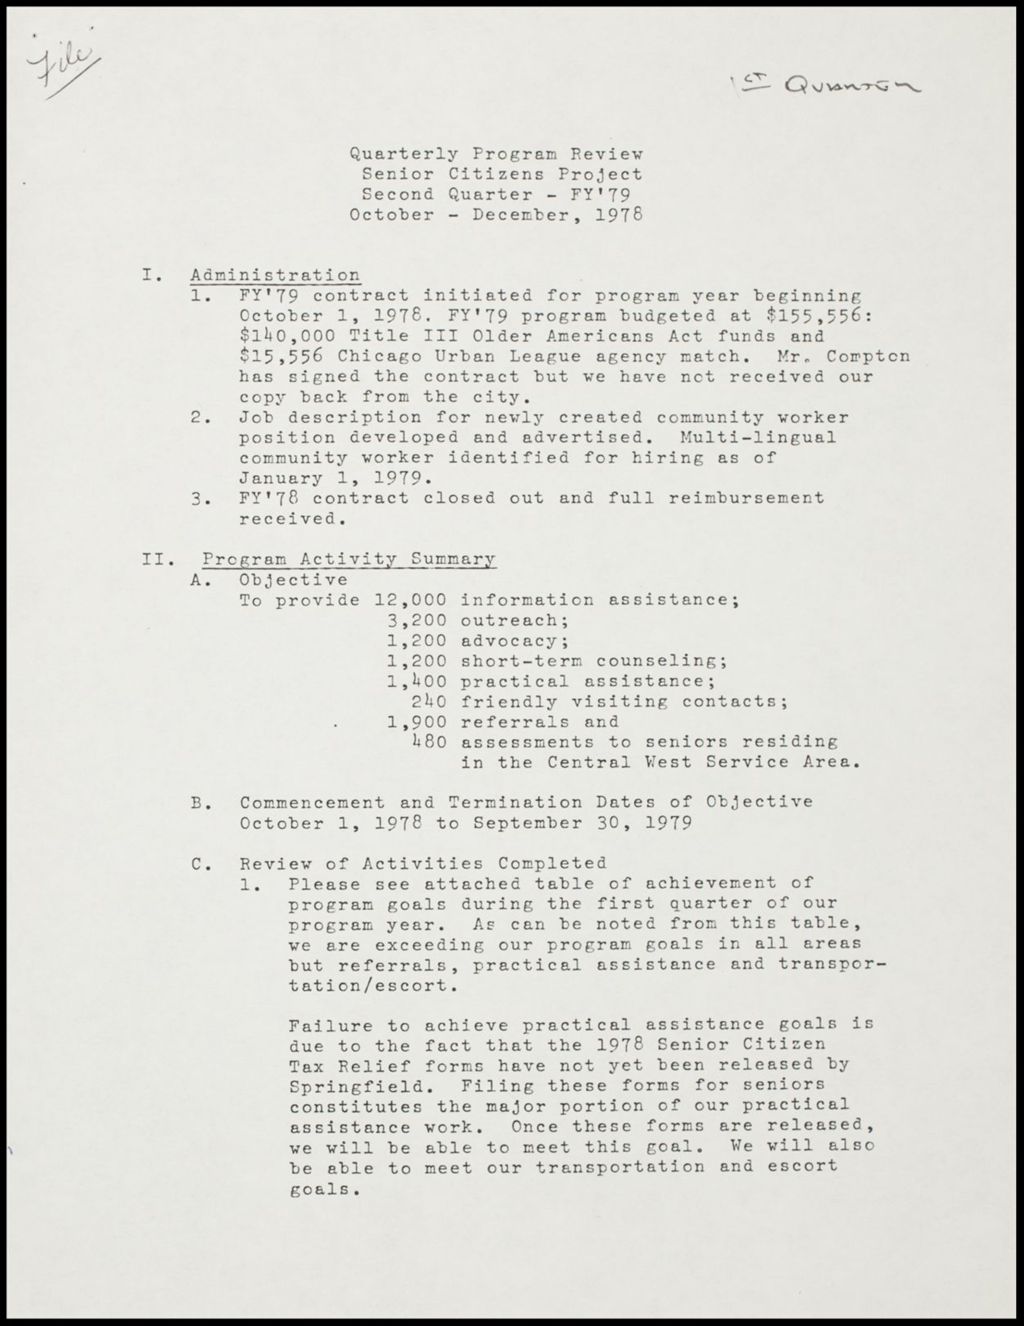 Miniature of Quarter year-end report, 1979 (Folder I-383)